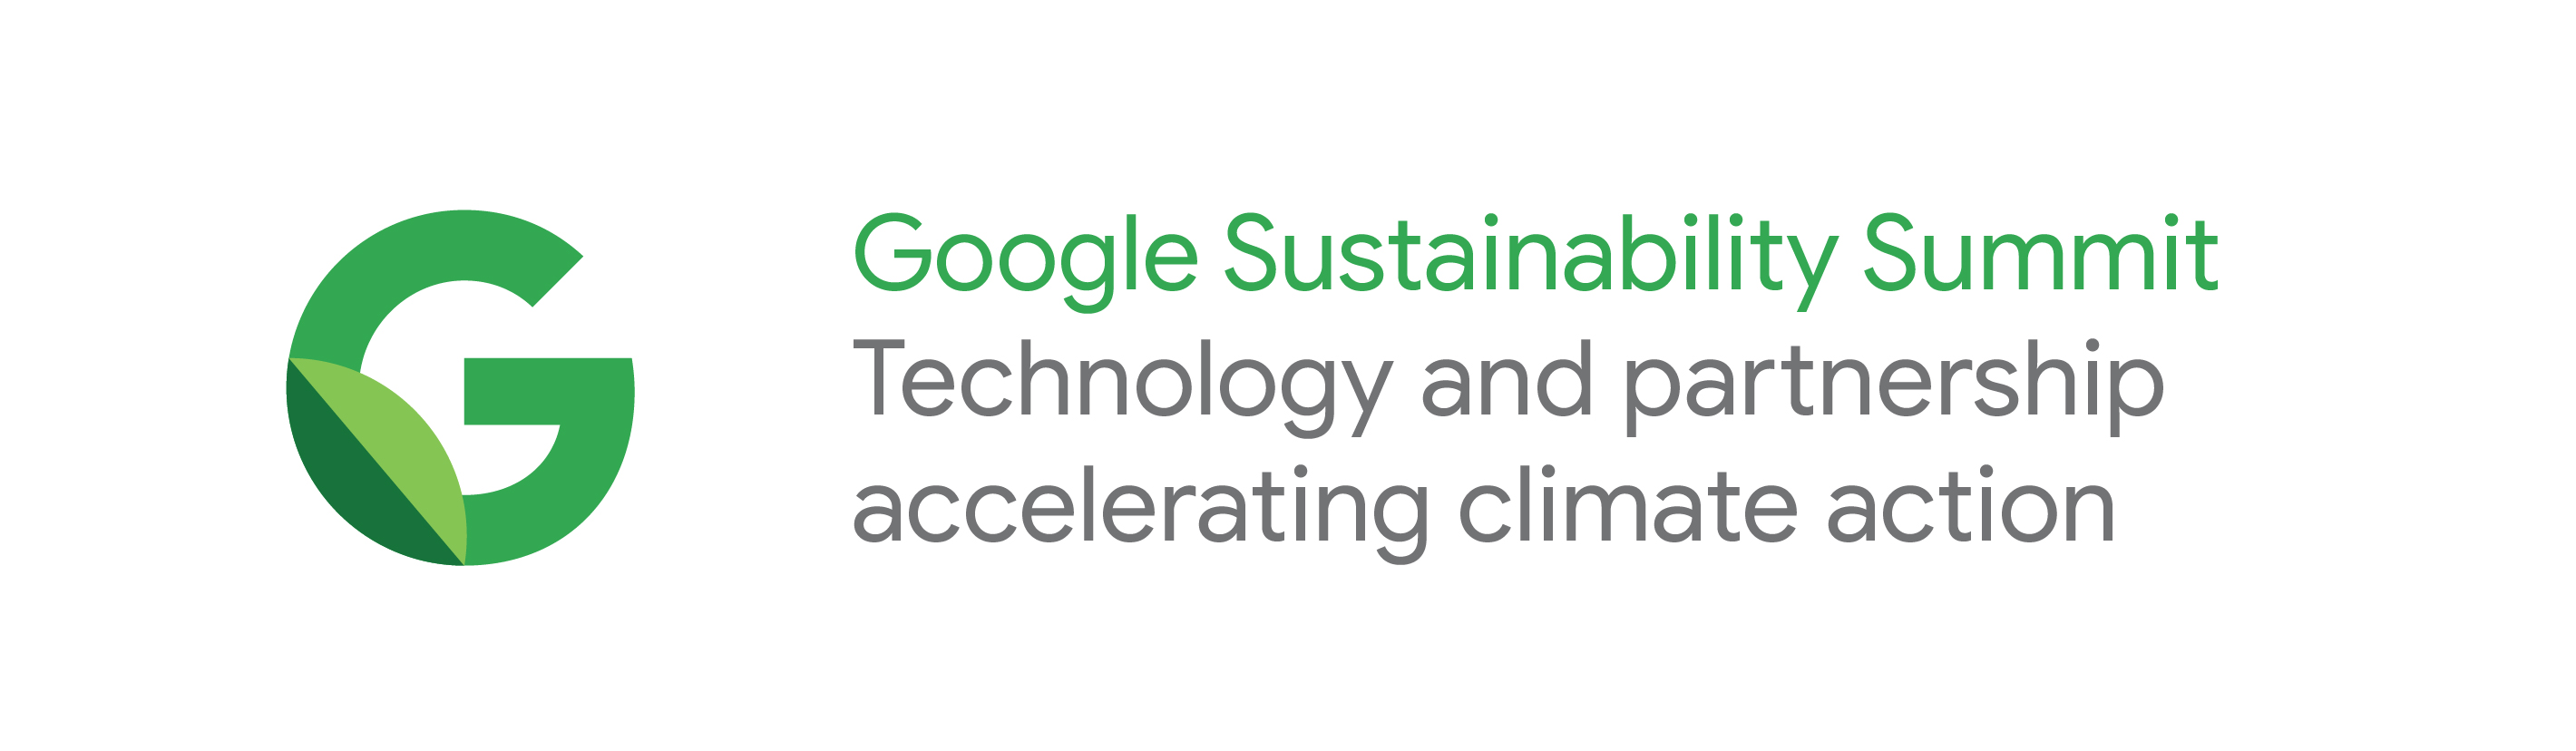 Google Sustainability Summit - Technology and partnership accelerating climate action